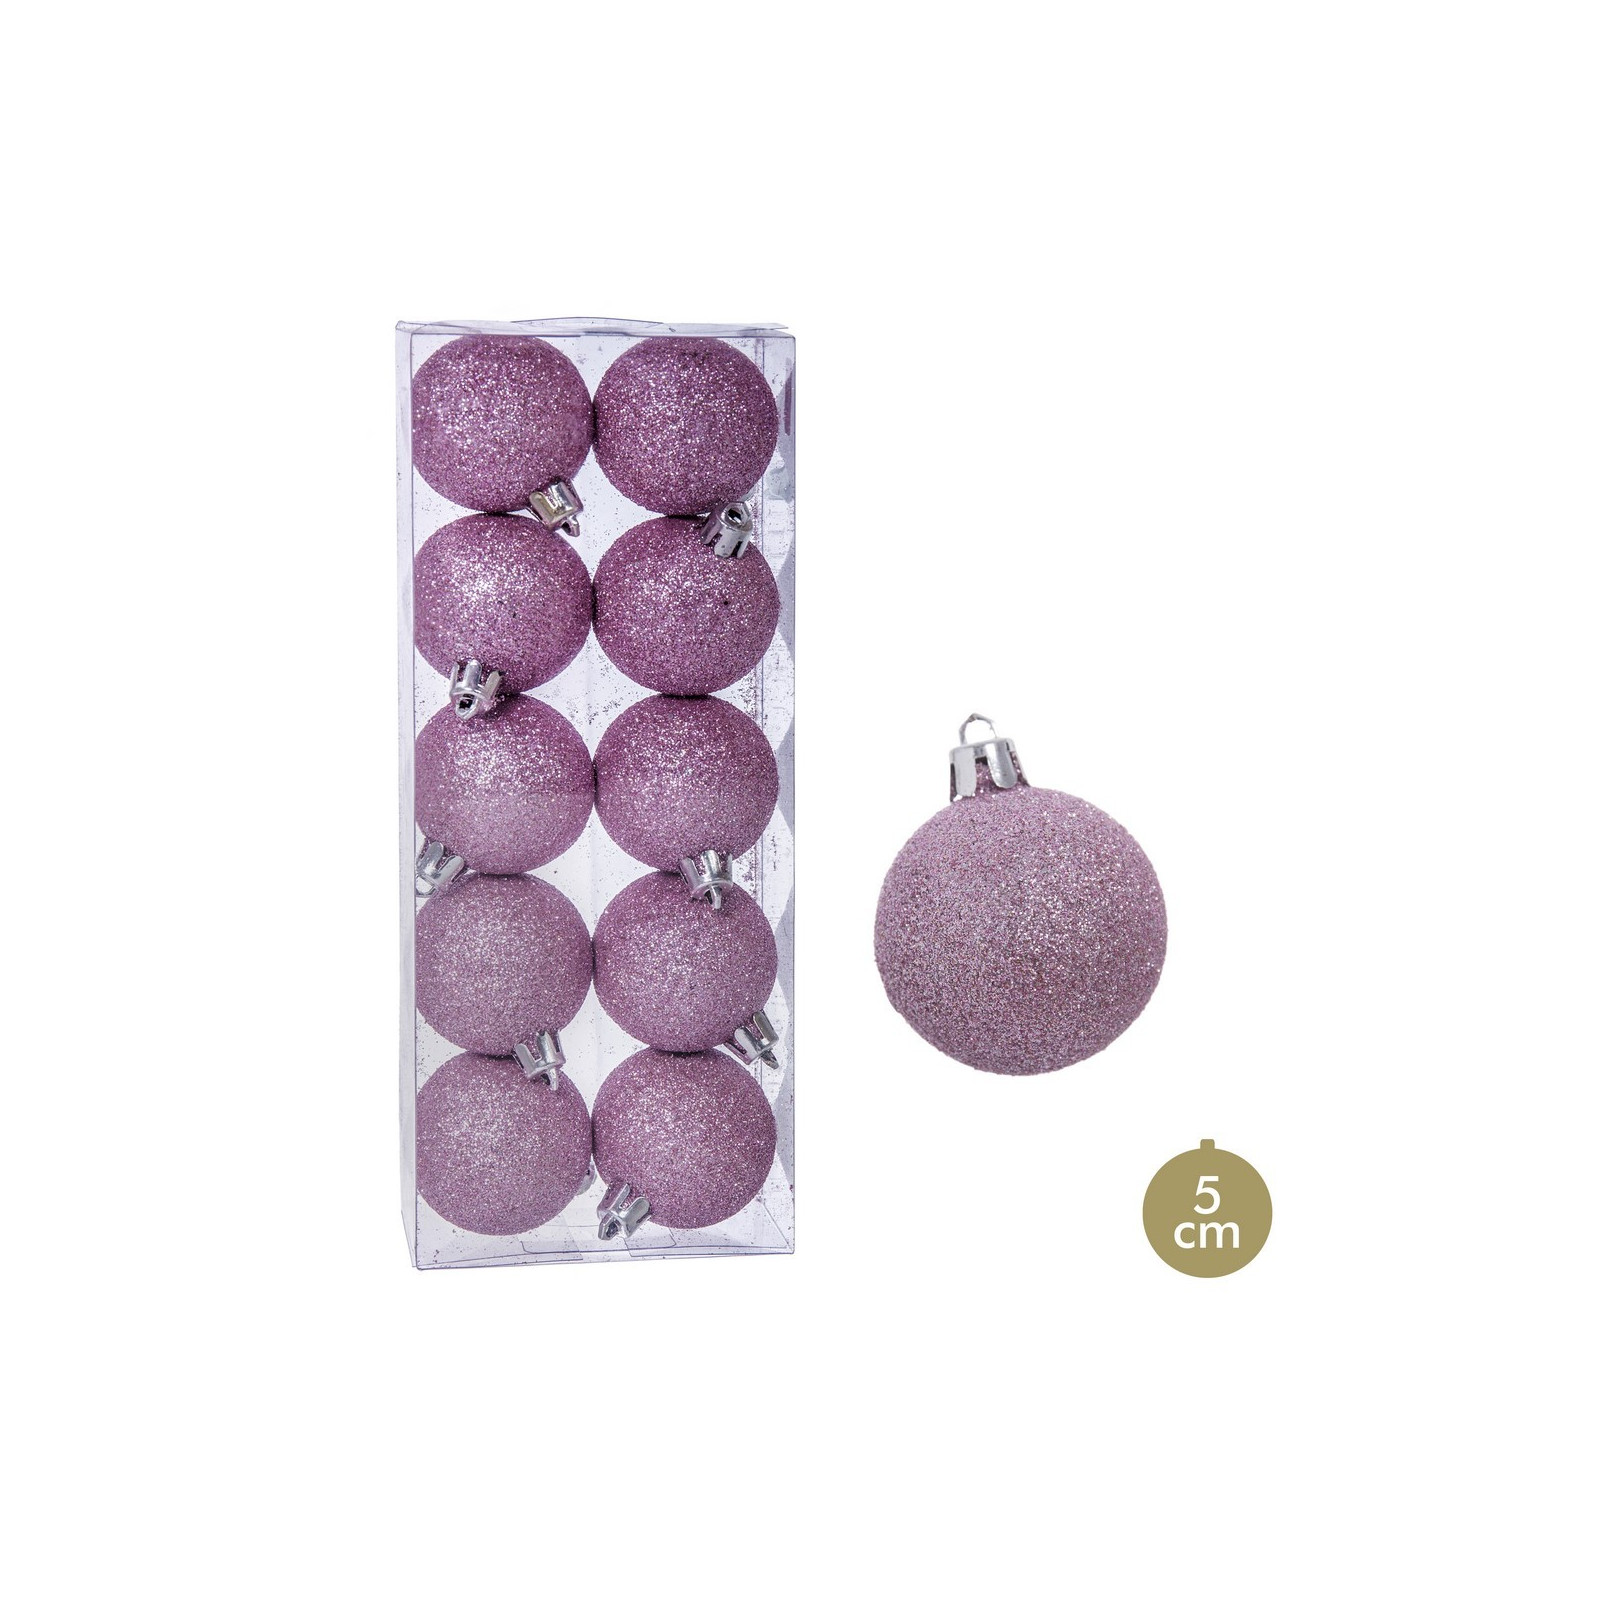 S 10 bolas purpurina plástico rosa 5 x 5 x 5 cm